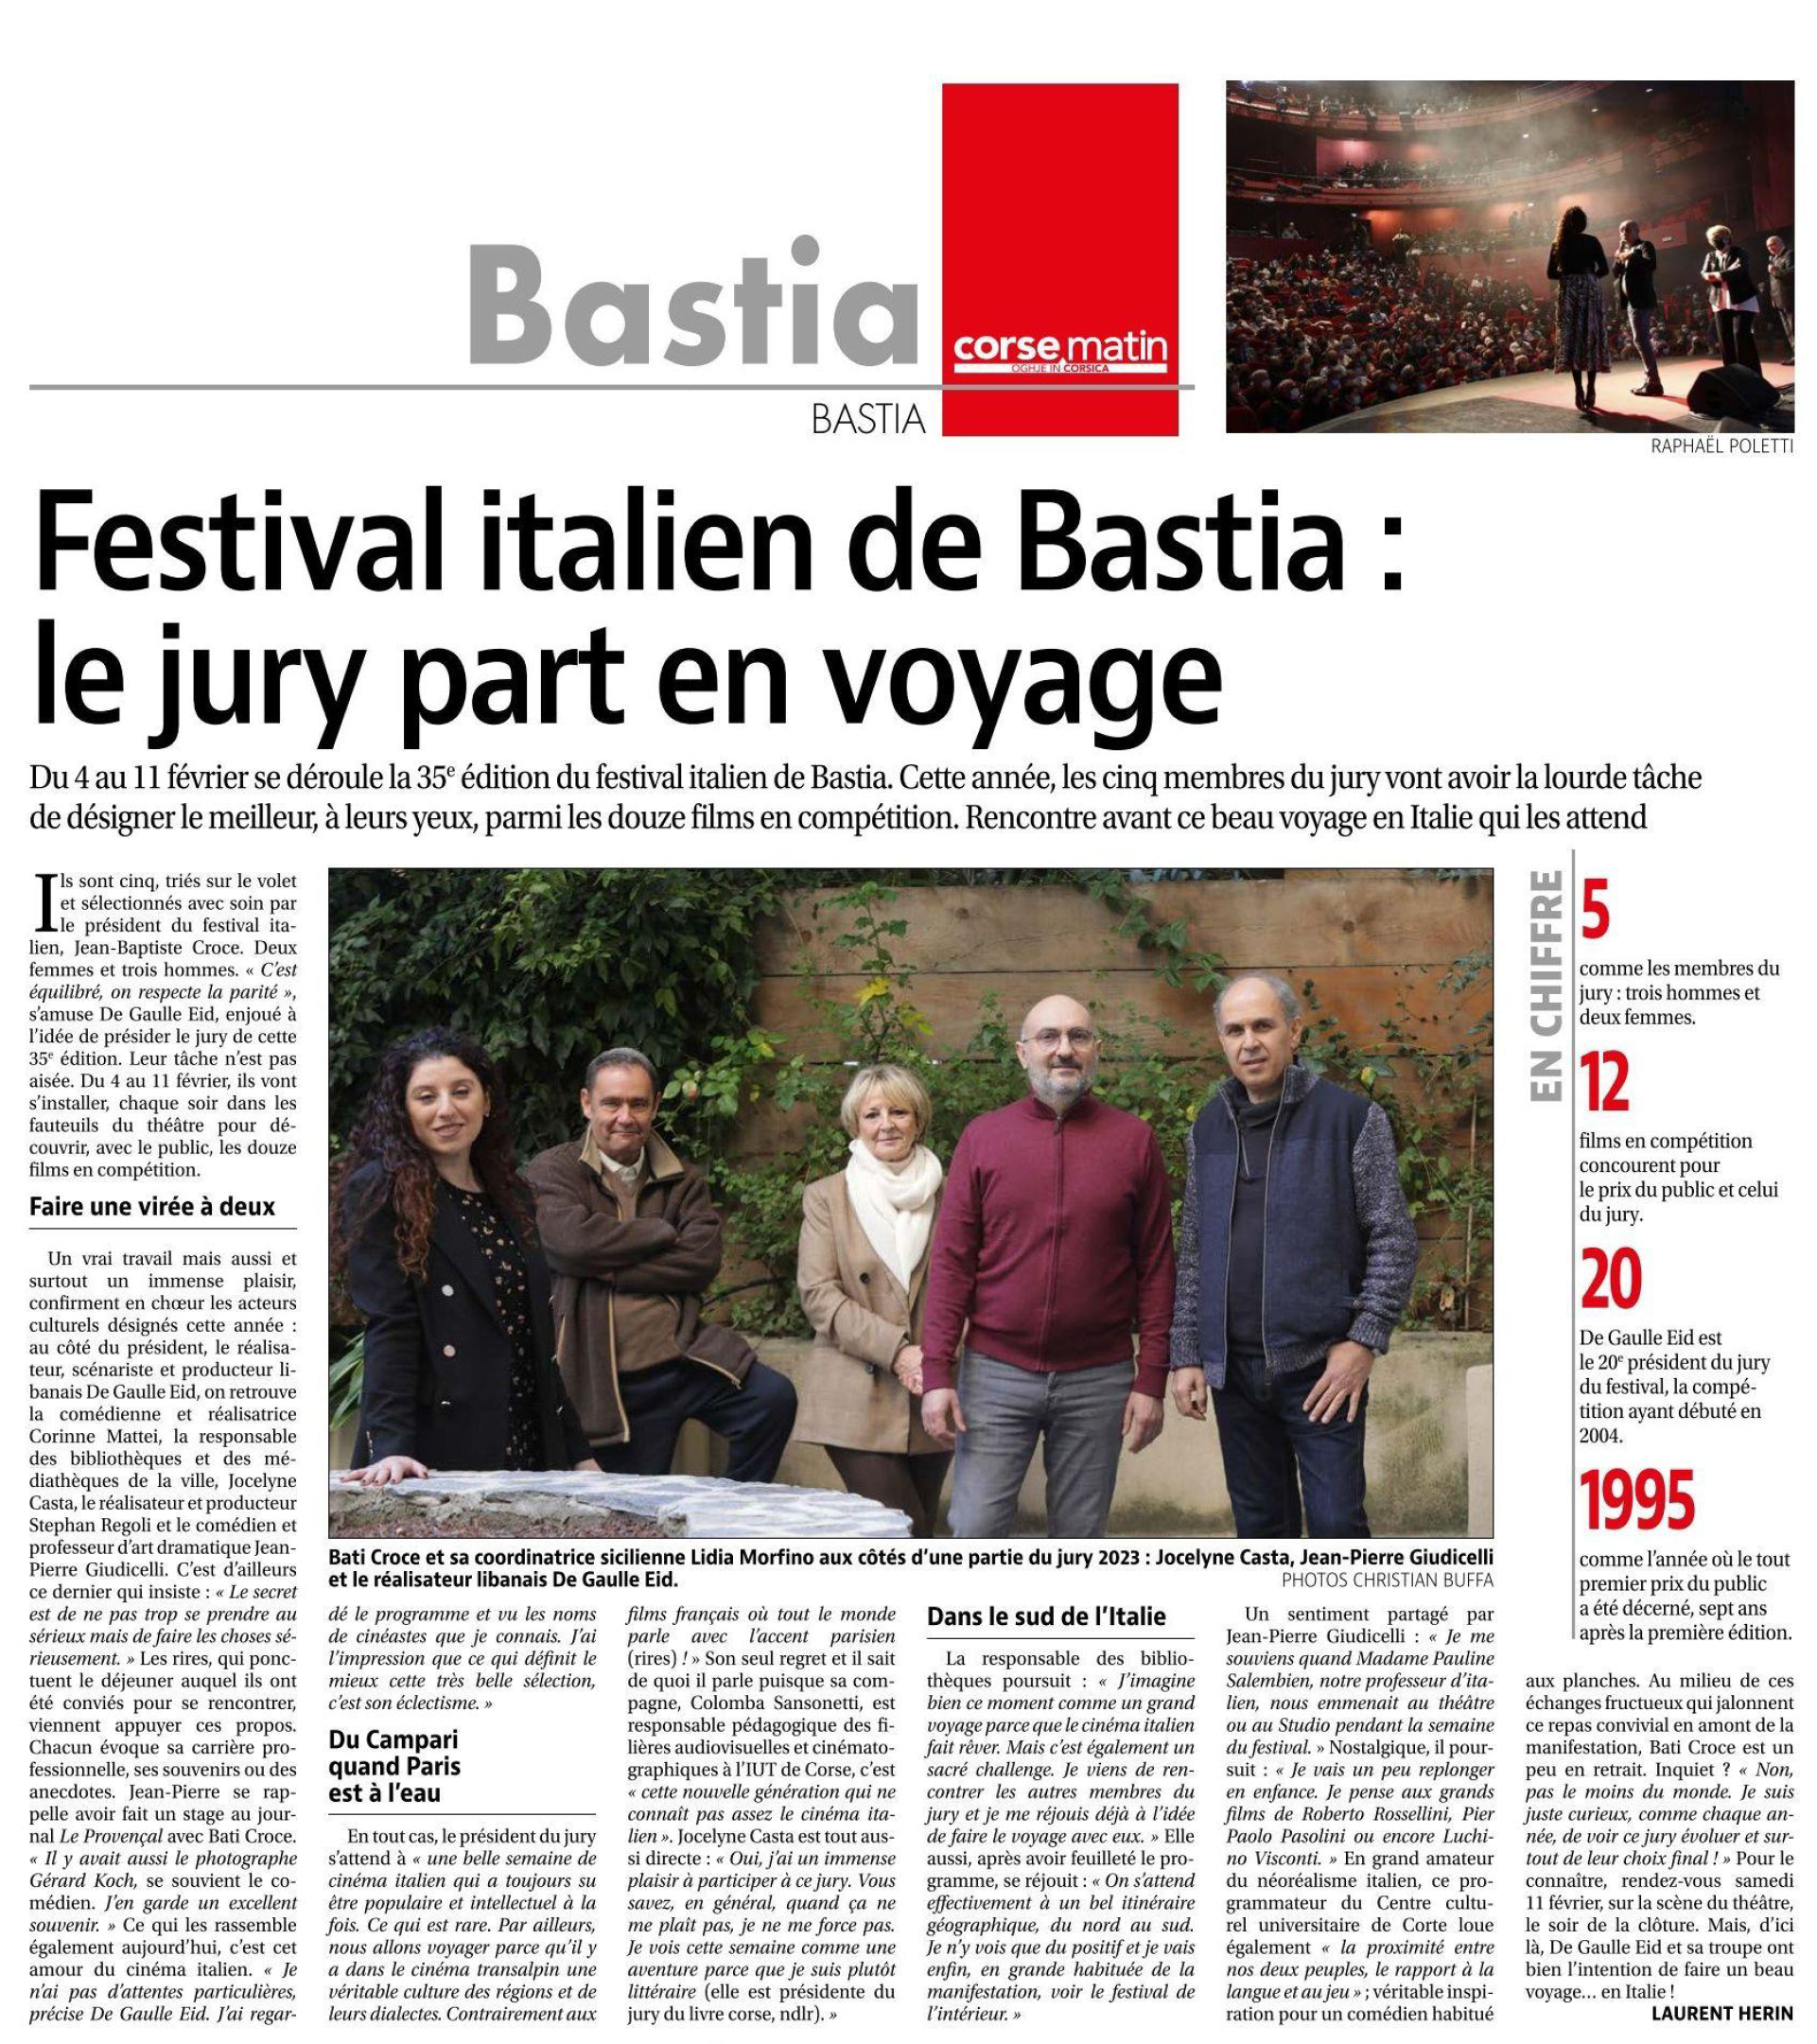 Festival italien de Bastia : le jury part en voyage